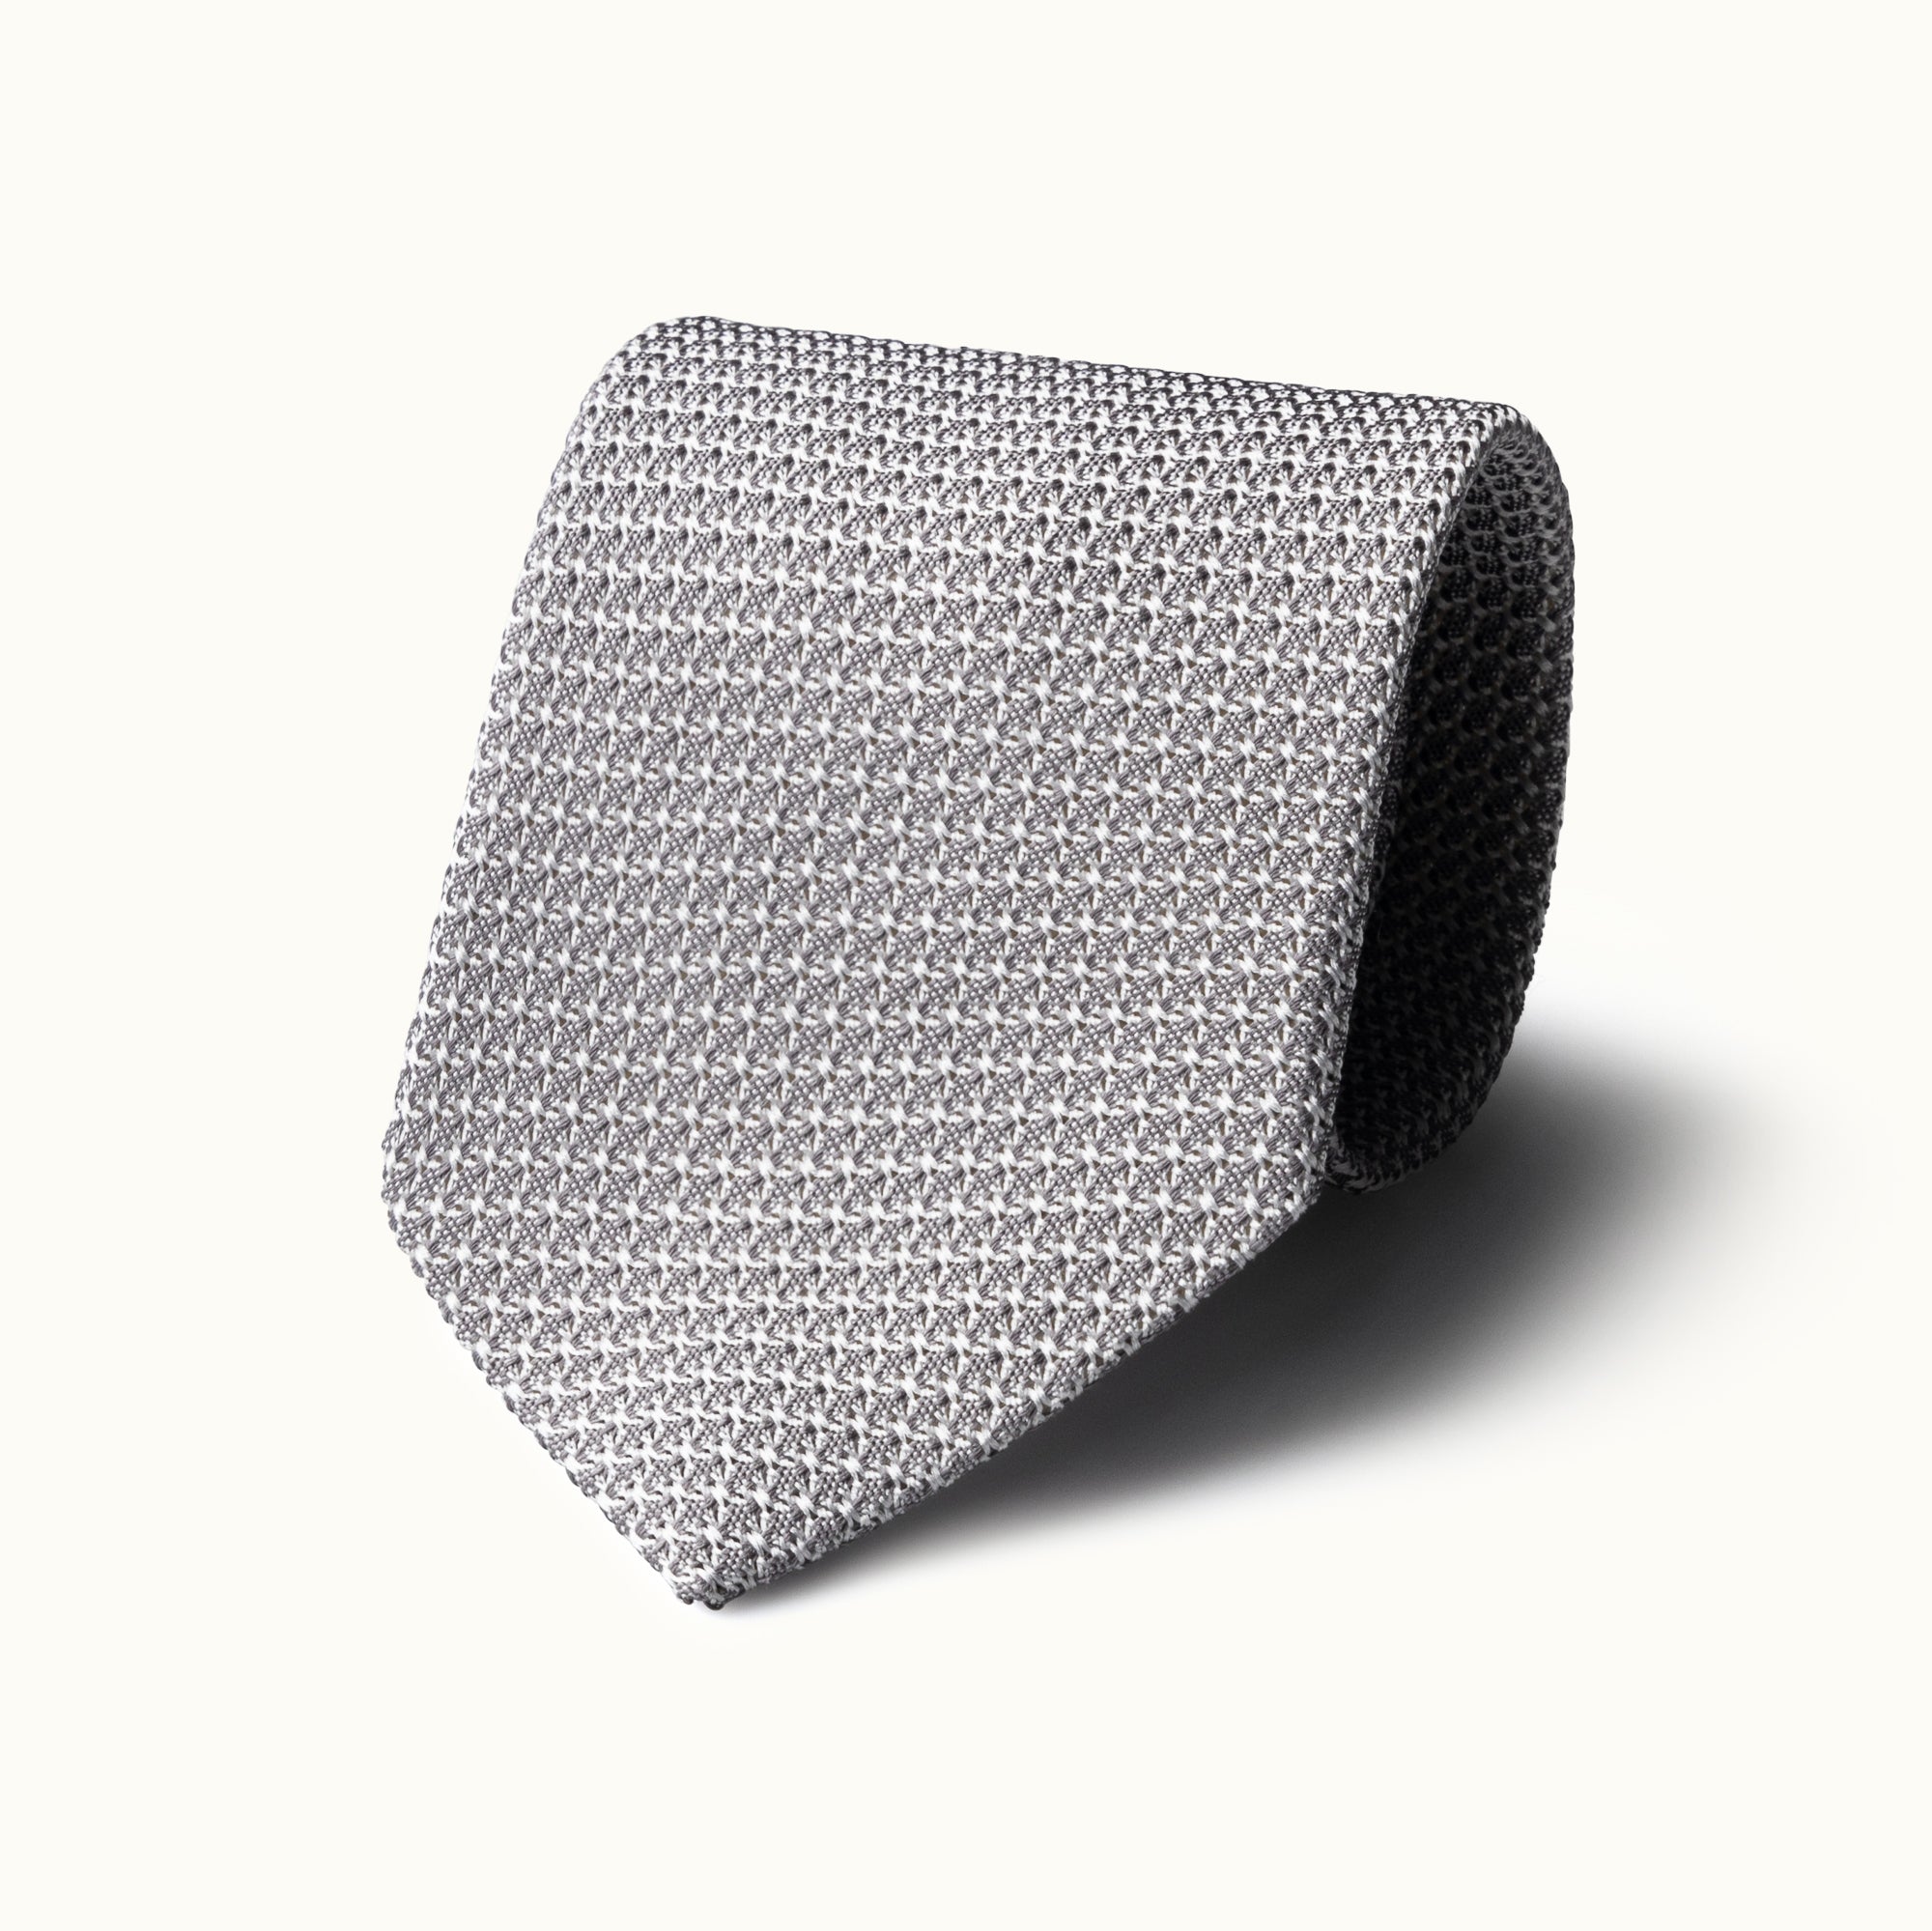 Light Grey Grenadine Tie